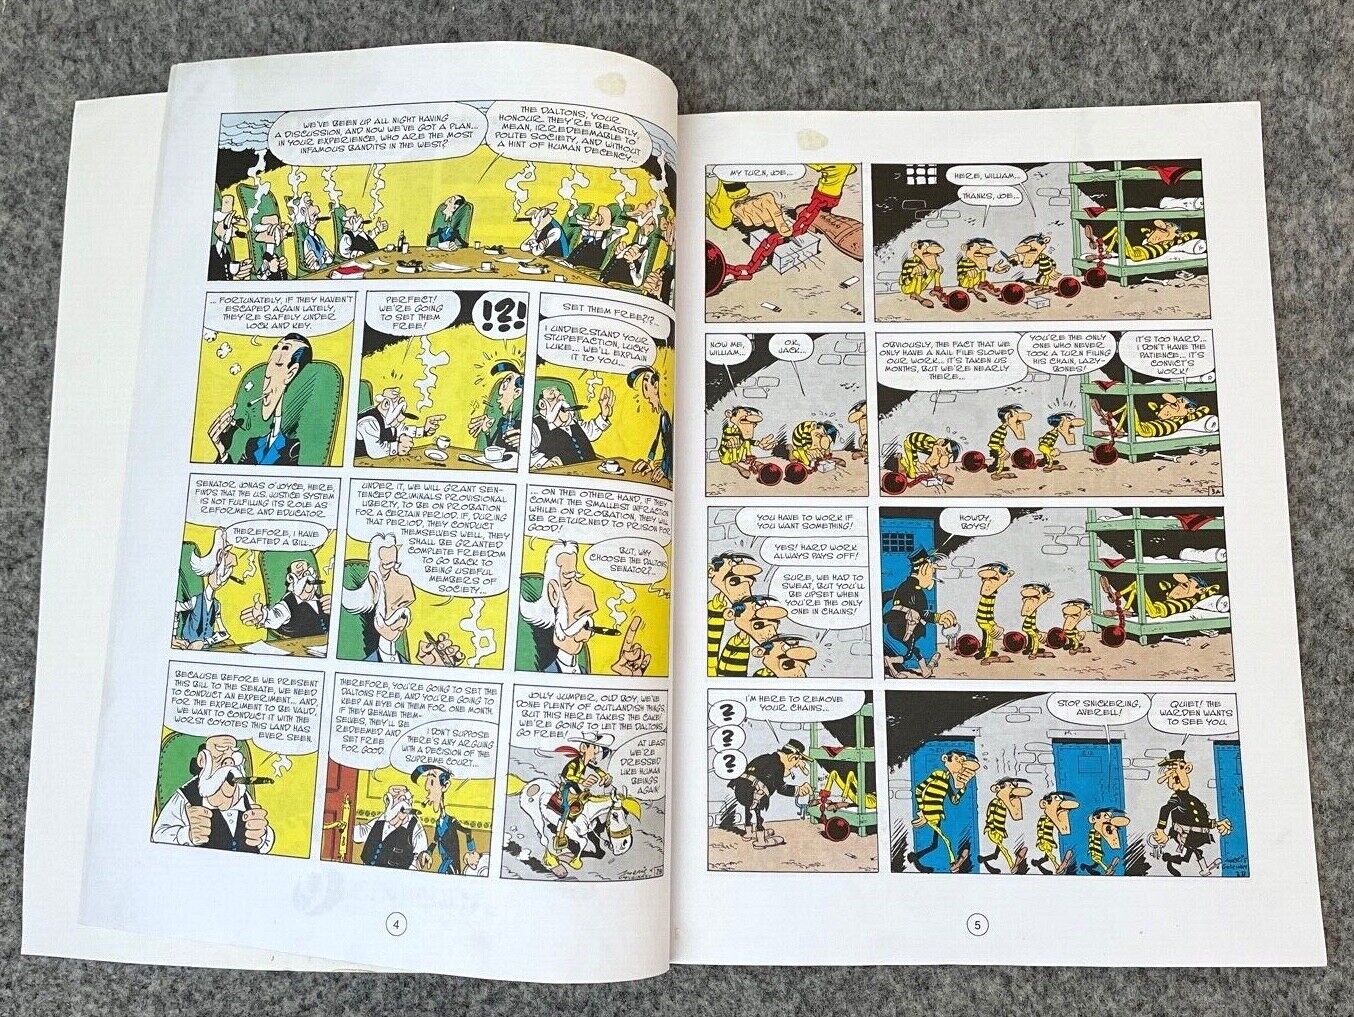 36 The Daltons Redeem Themselves Lucky Luke Cinebook Paperback UK Comic Book